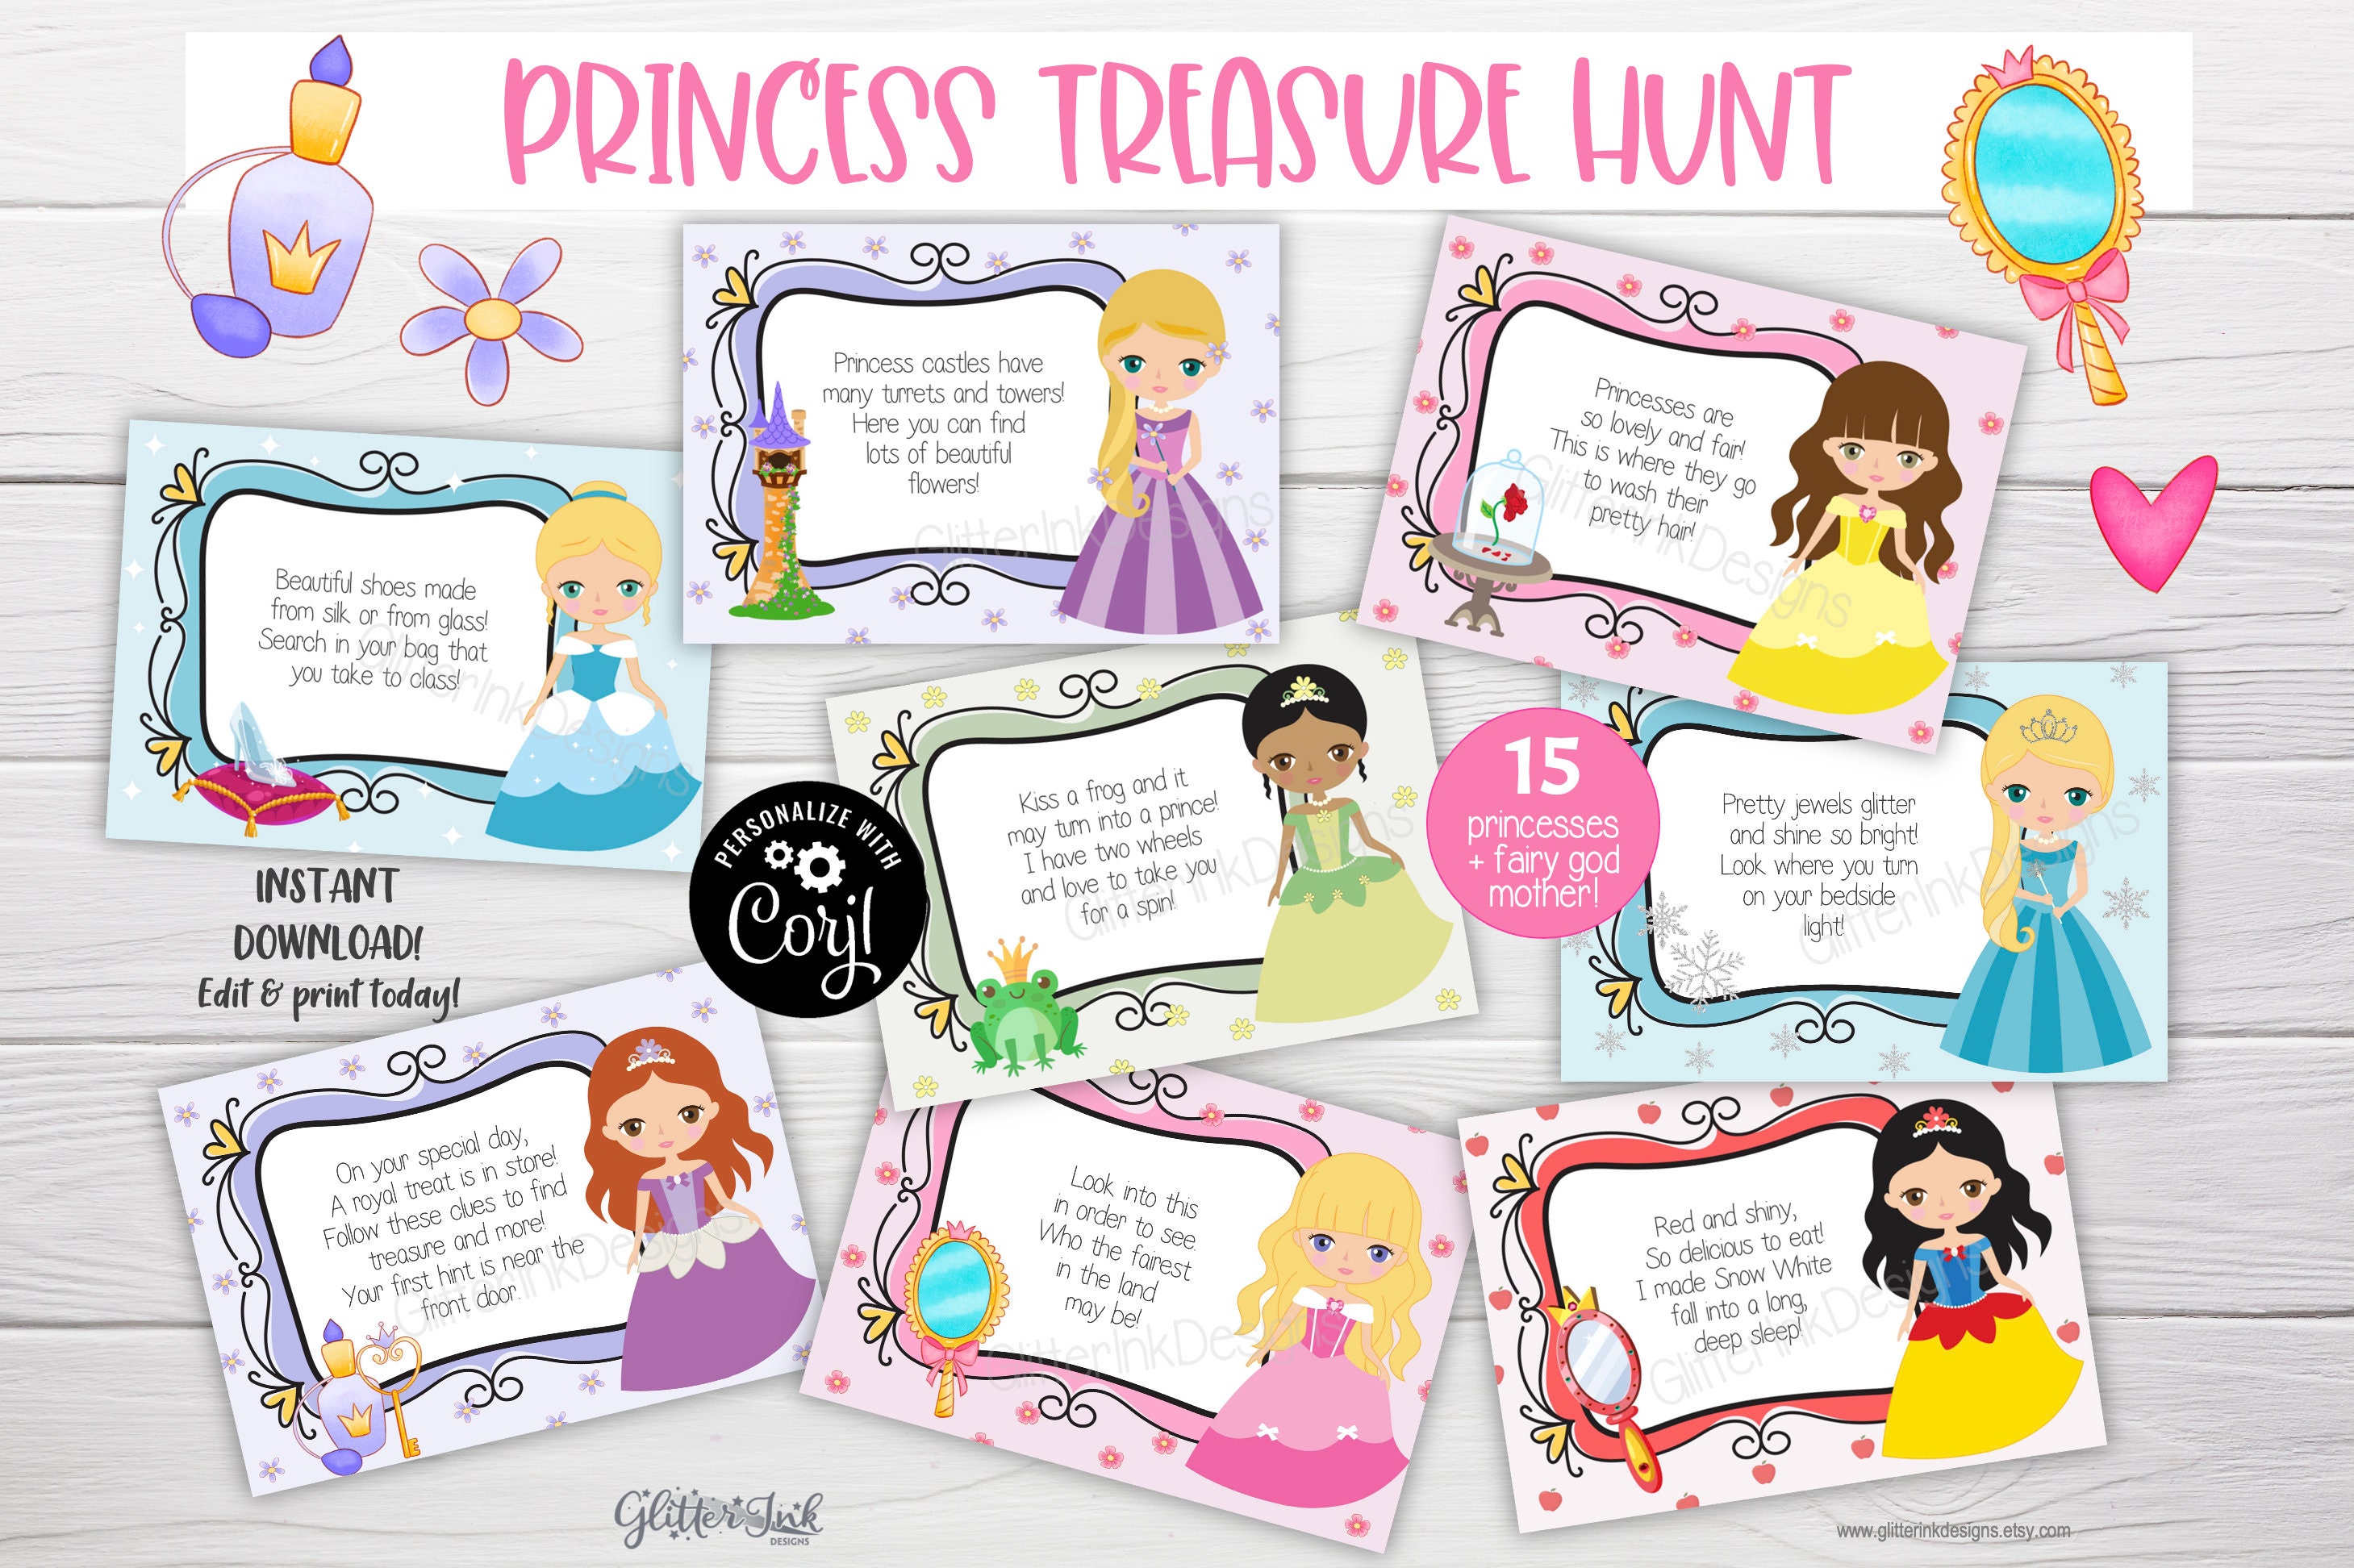 Disney Princess Digital paper Scrapbooking - Party and Craft Supply